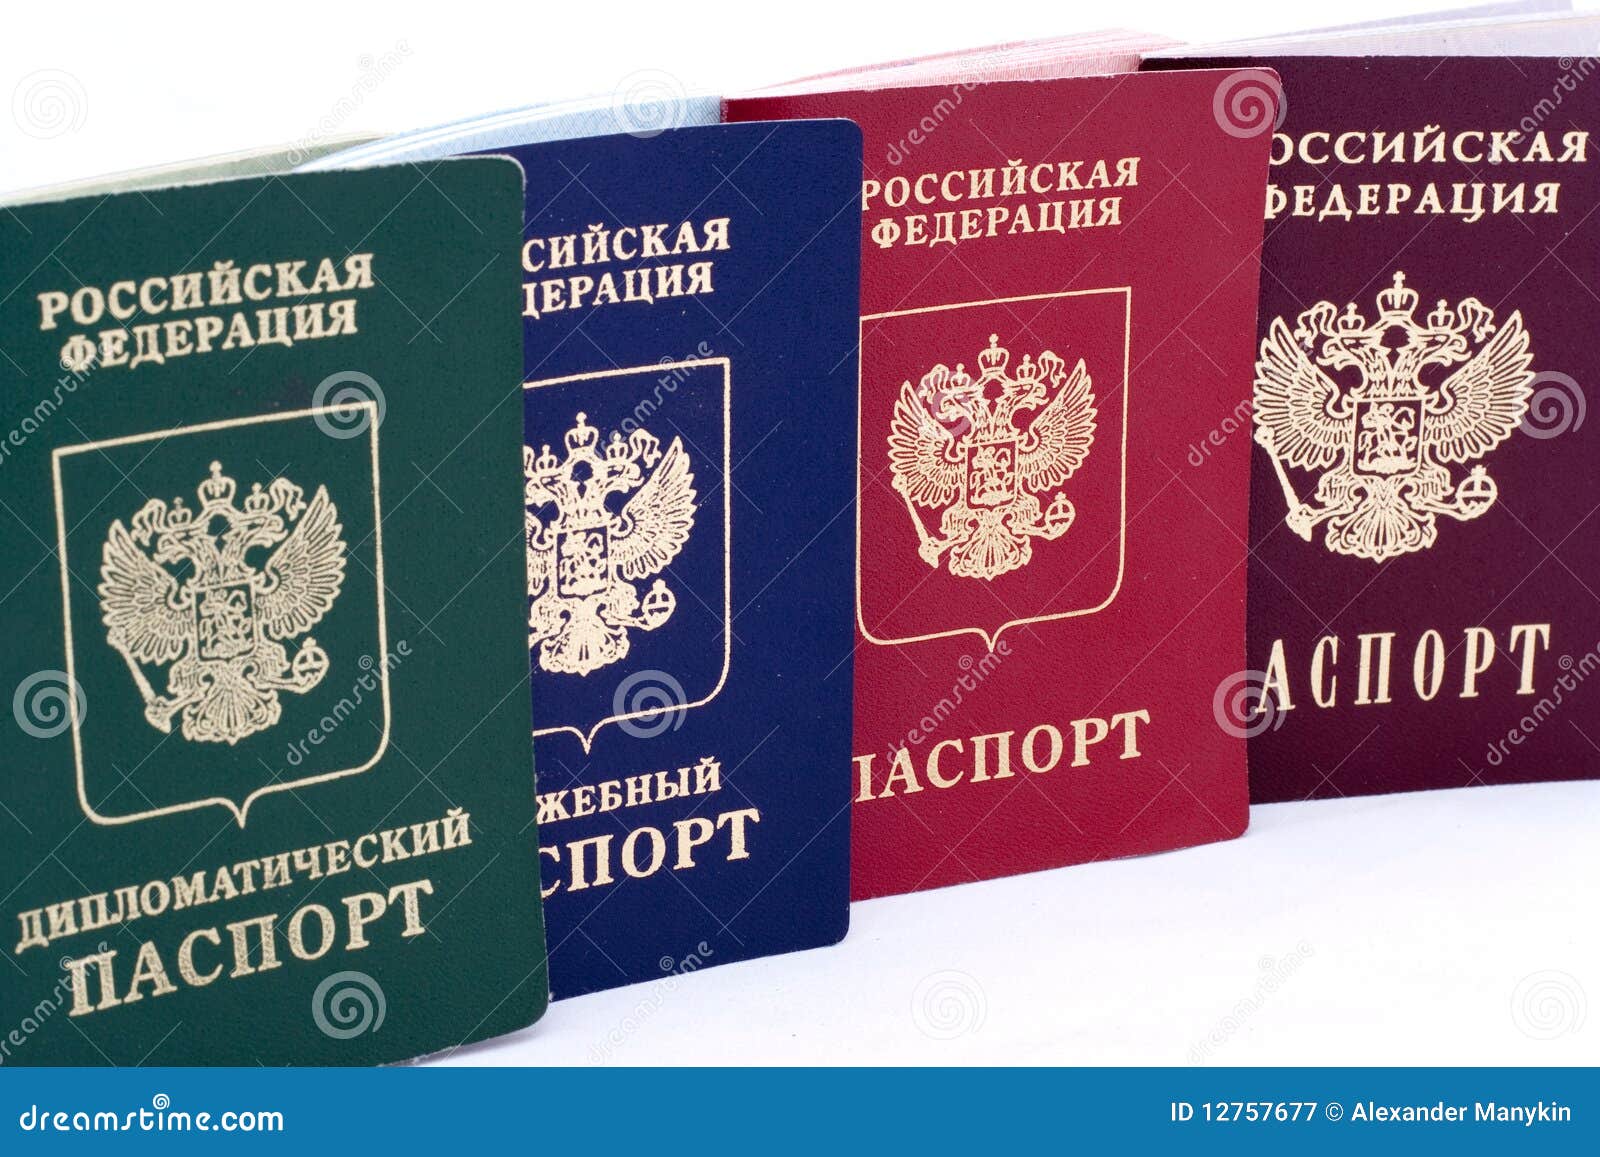 Passeport russe. Passeport diplomatique russe, passeport de service et passeport étranger